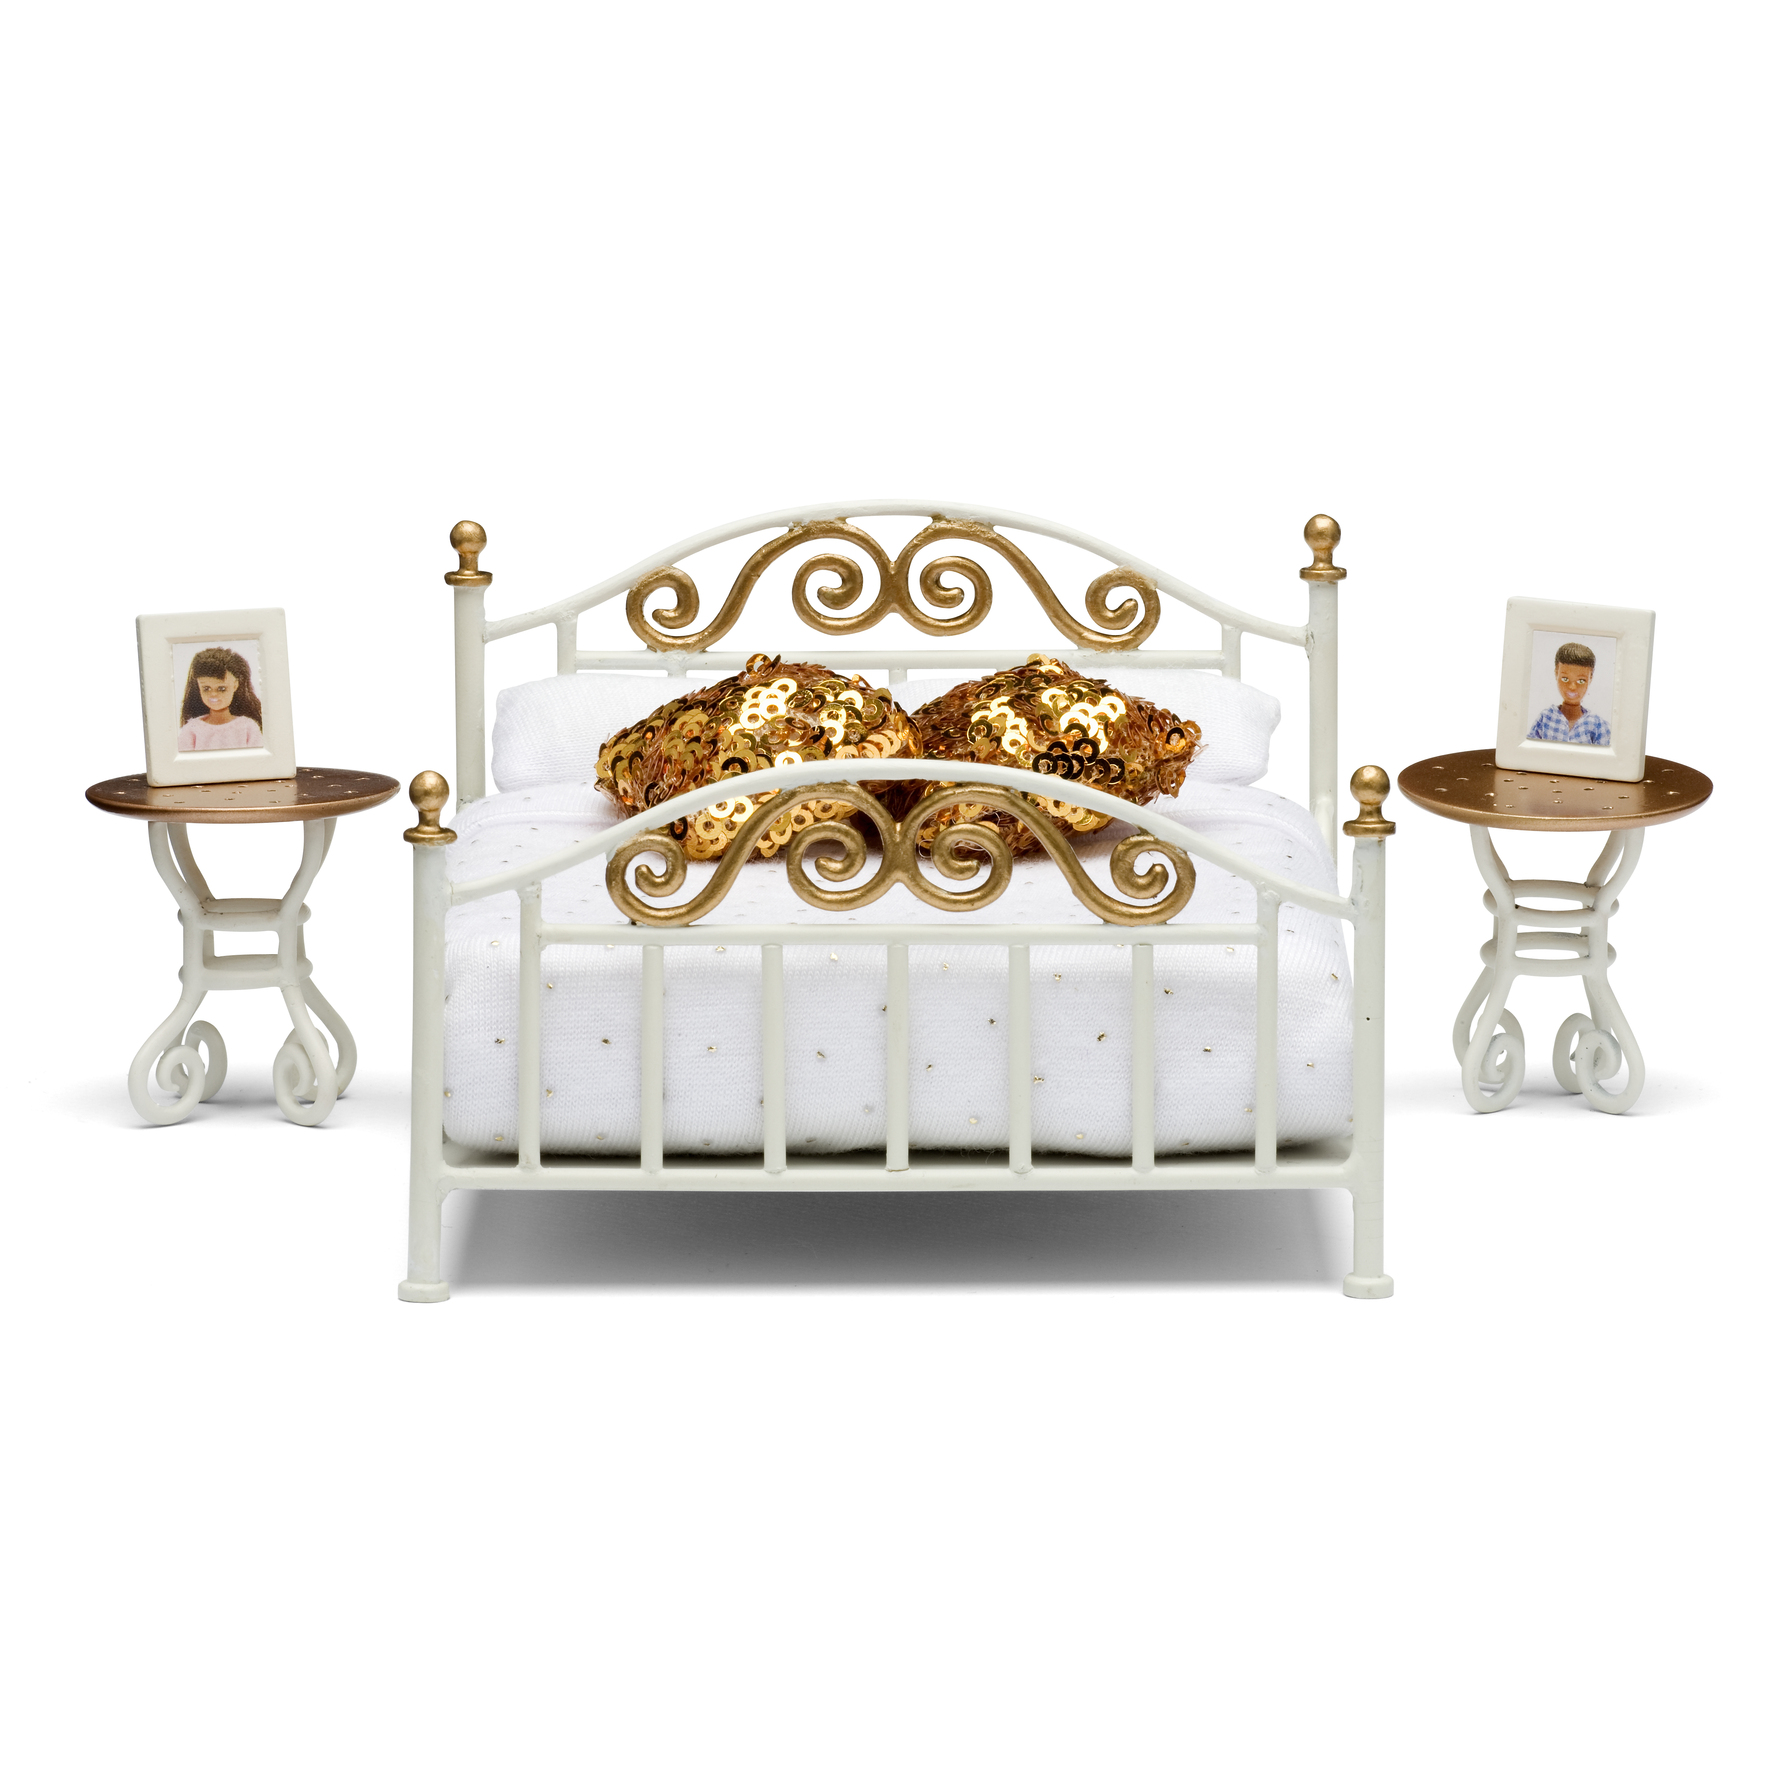 Lundby lundby dollhouse furniture bedroom set brass